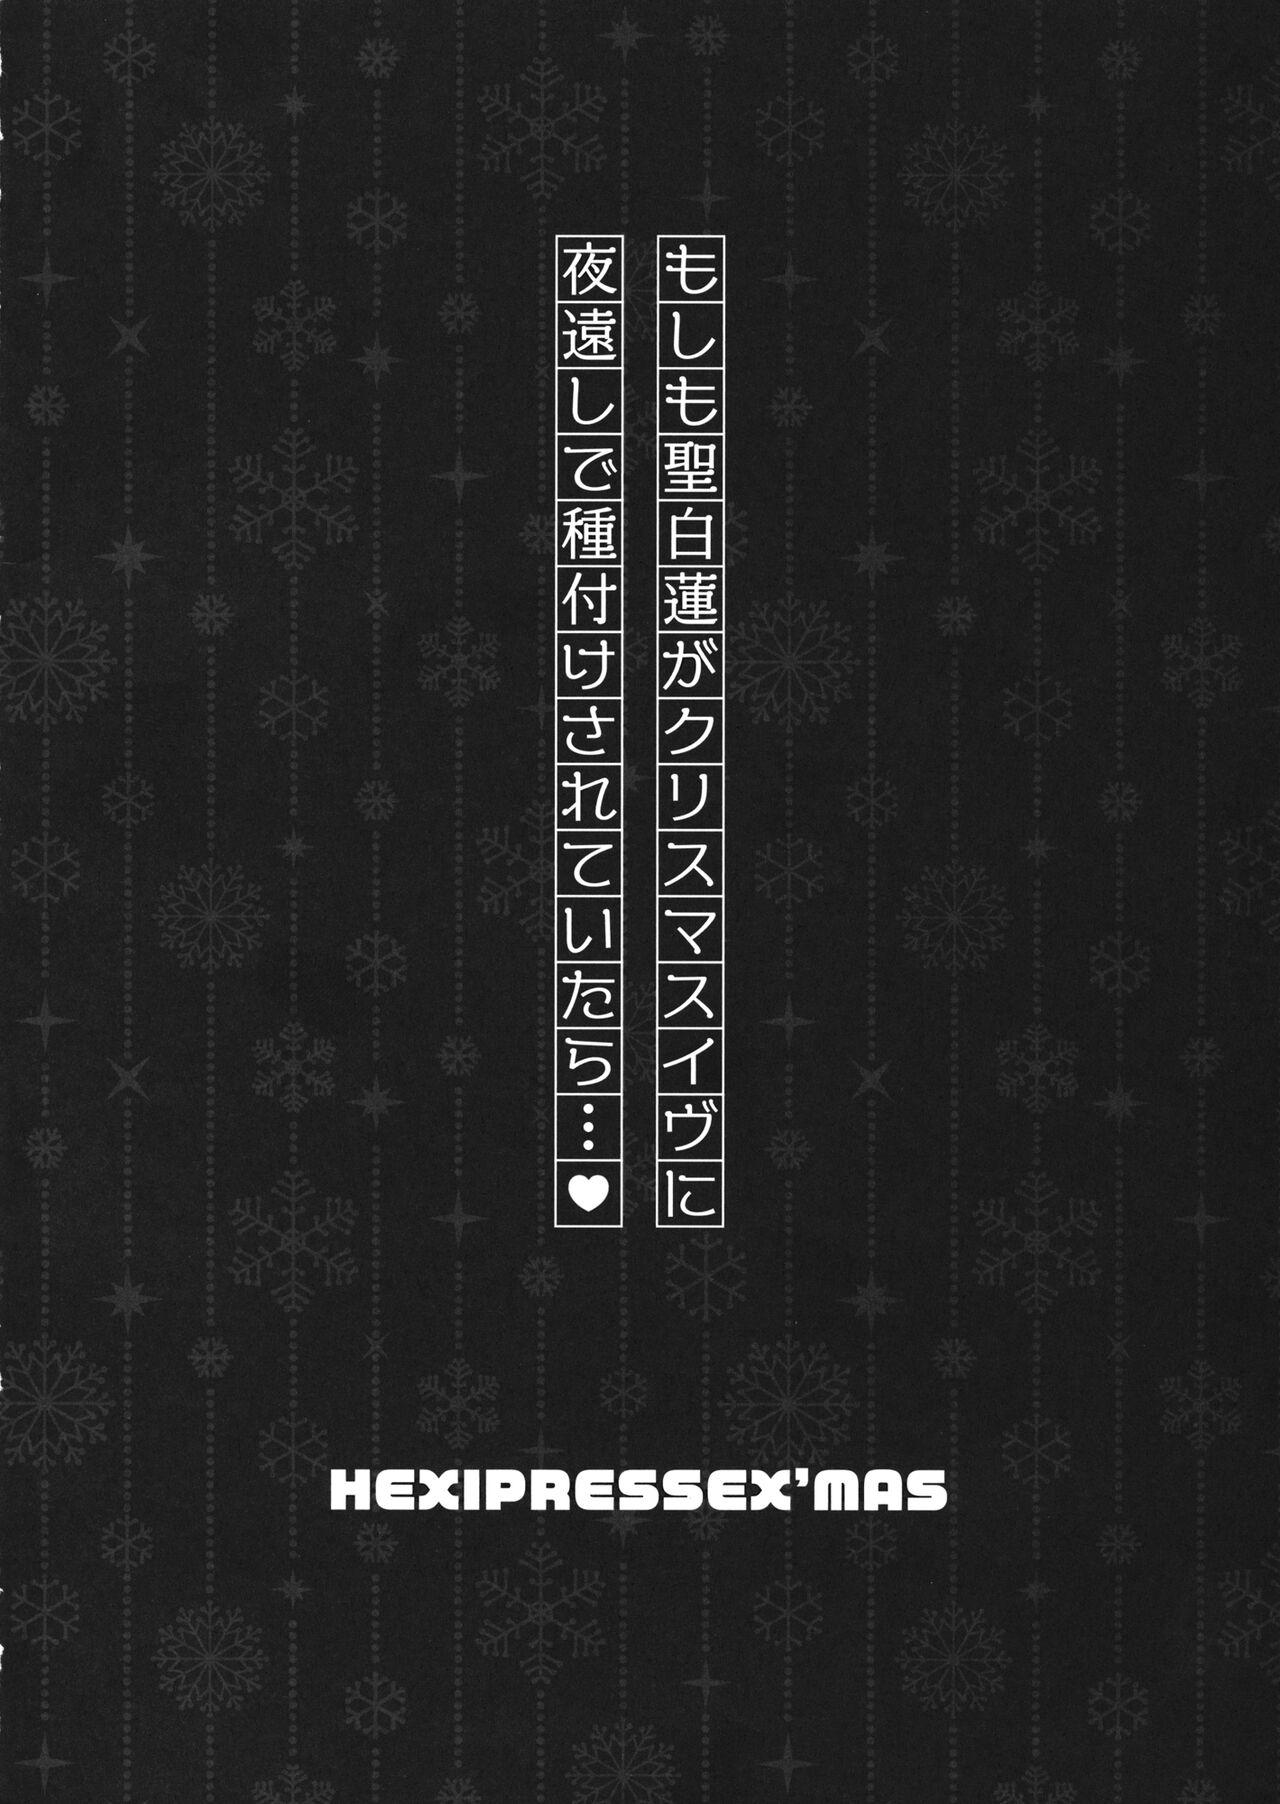 HEXIPRESSEX’MAS 2